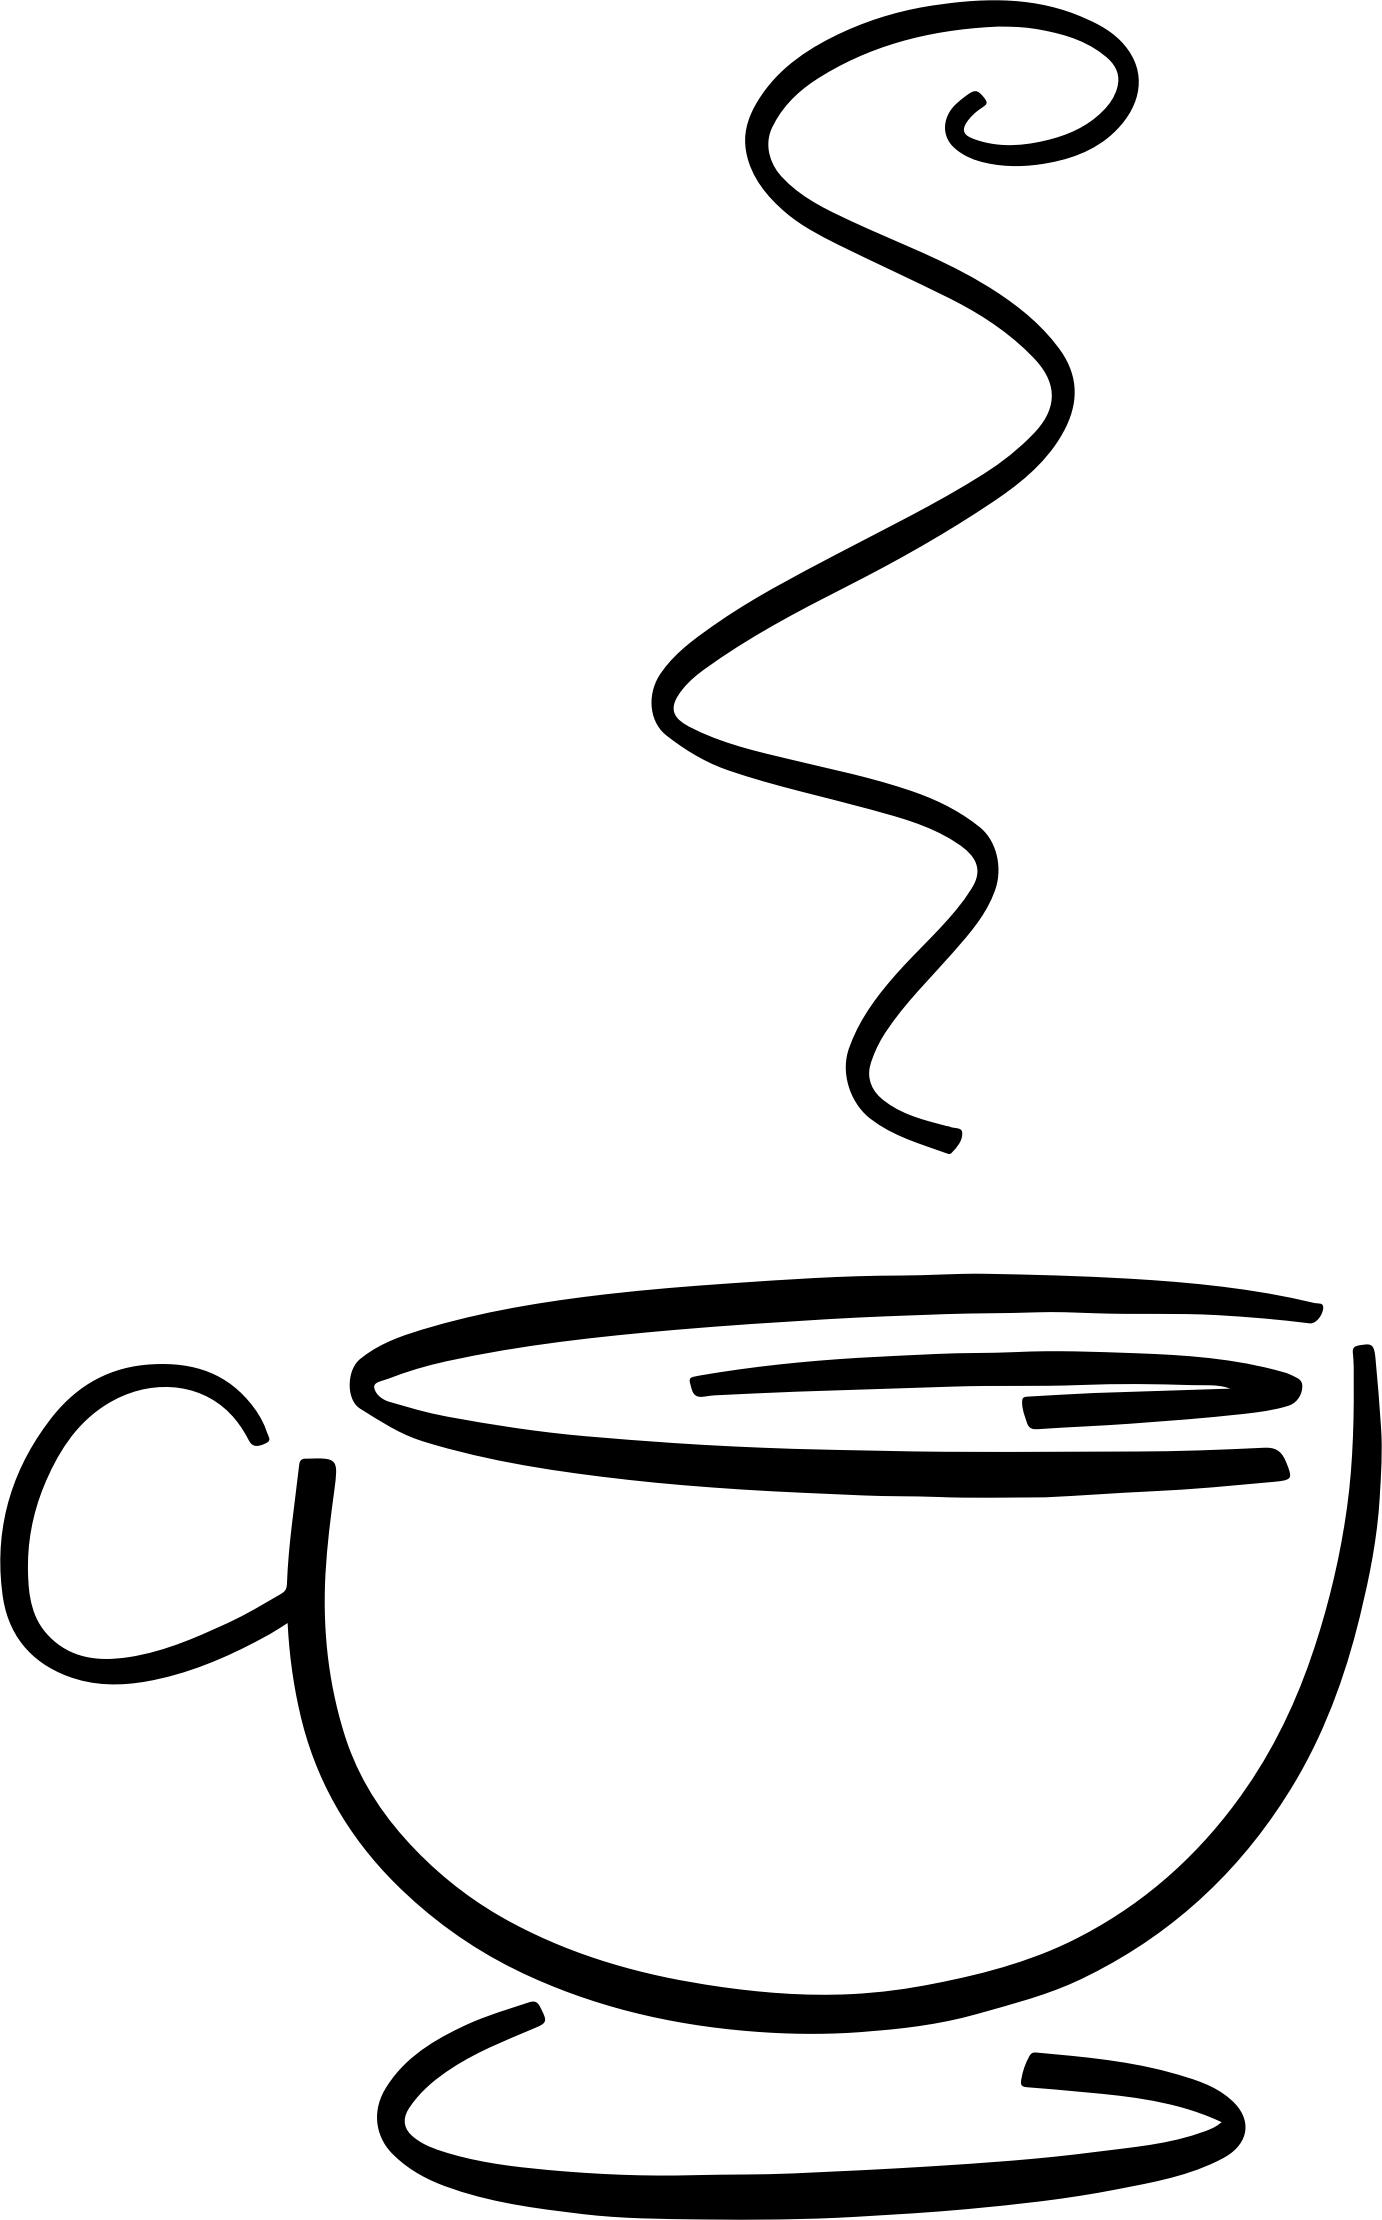 Cup Of Hot Beverage Line Art png